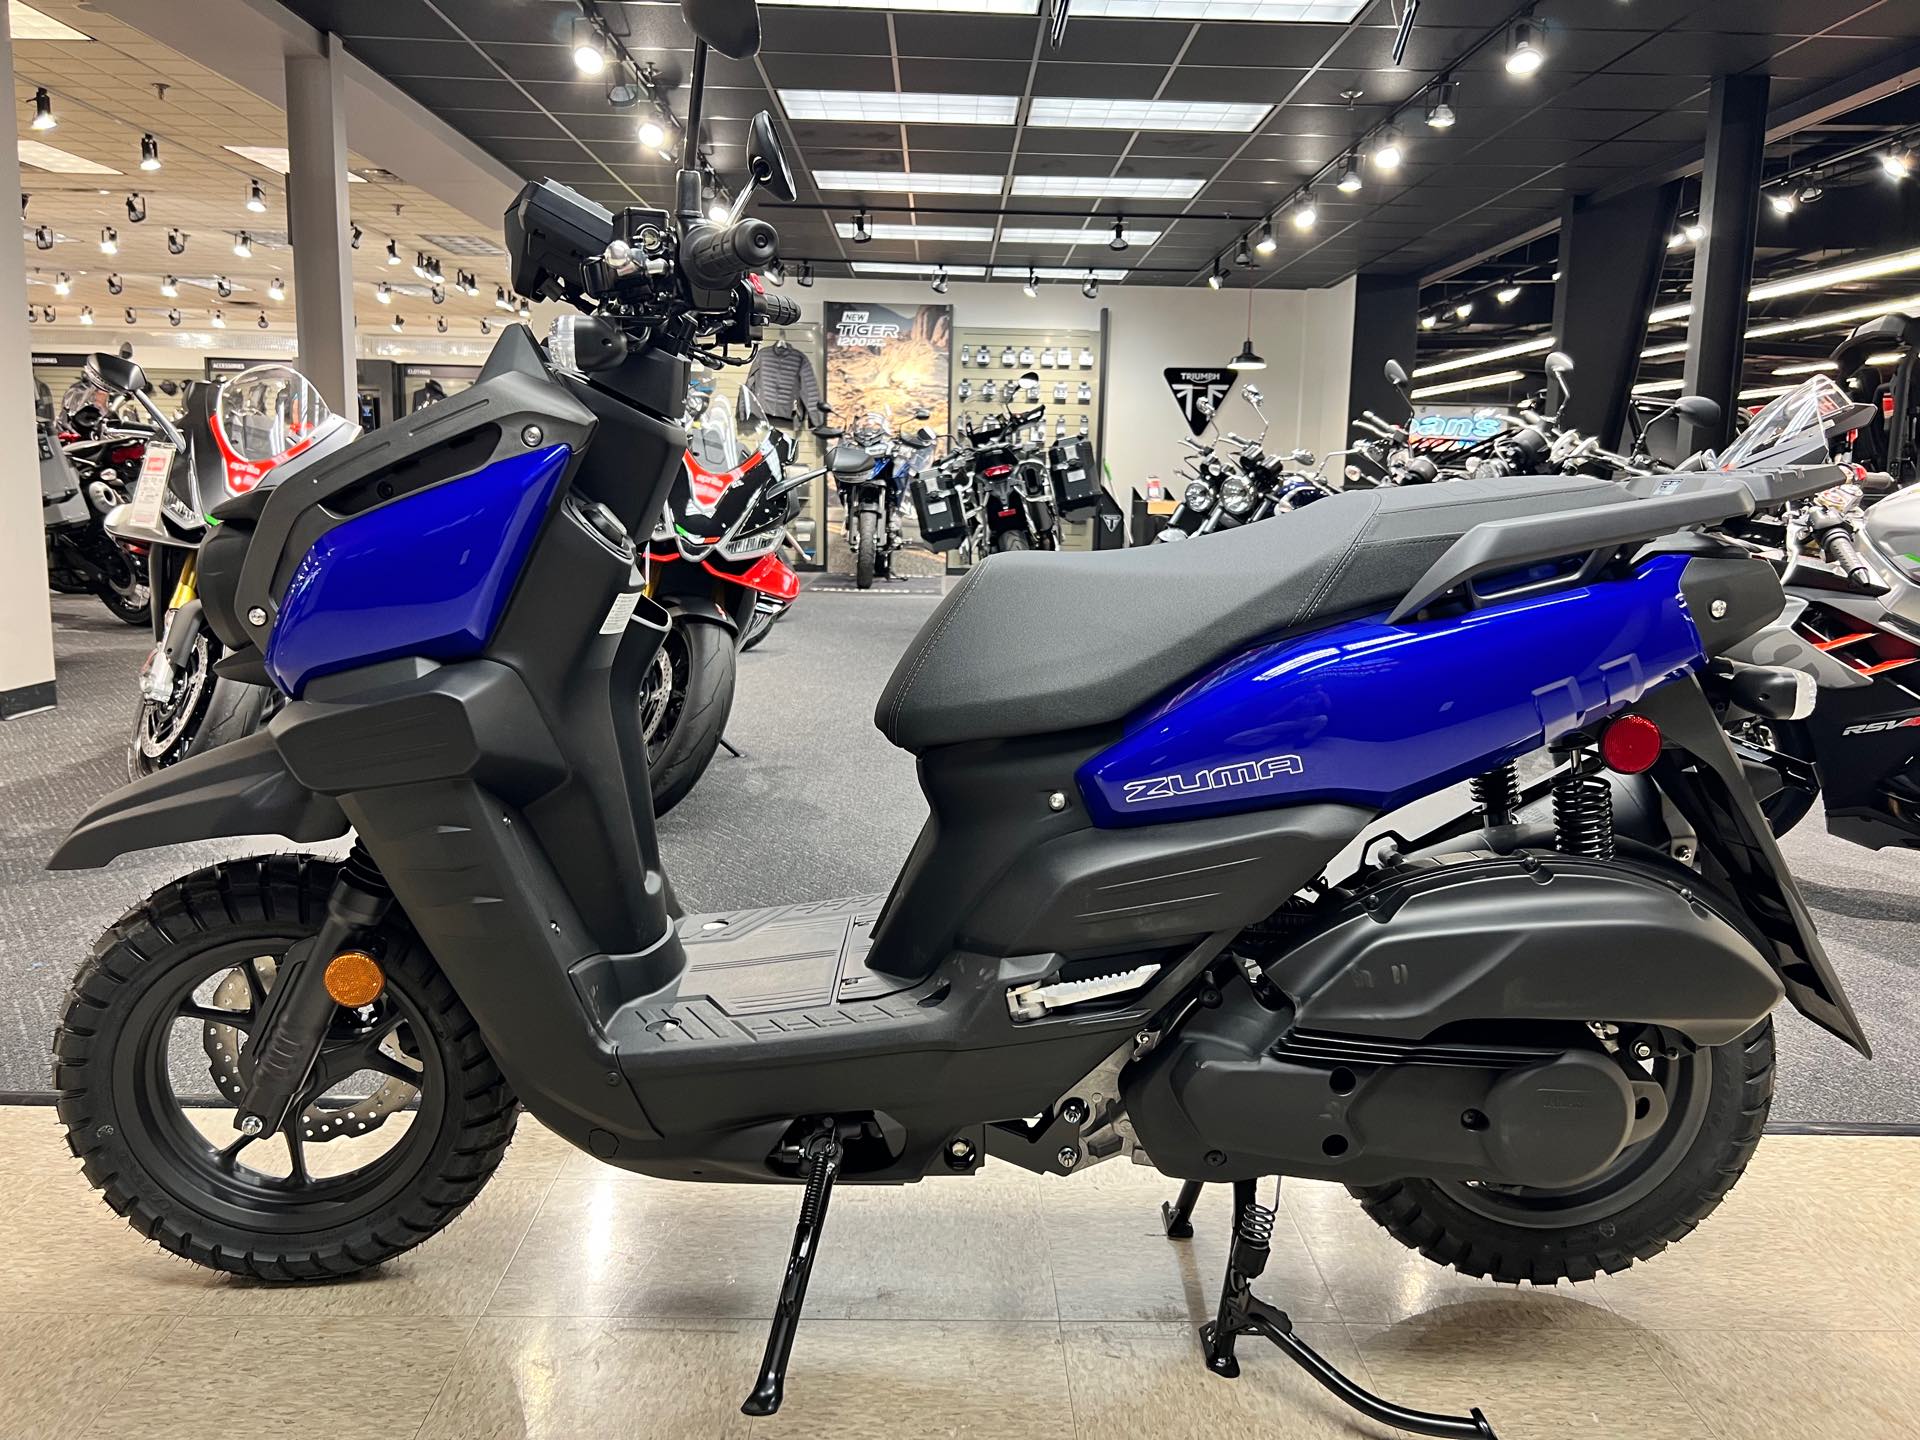 2022 Yamaha Zuma 125 at Sloans Motorcycle ATV, Murfreesboro, TN, 37129